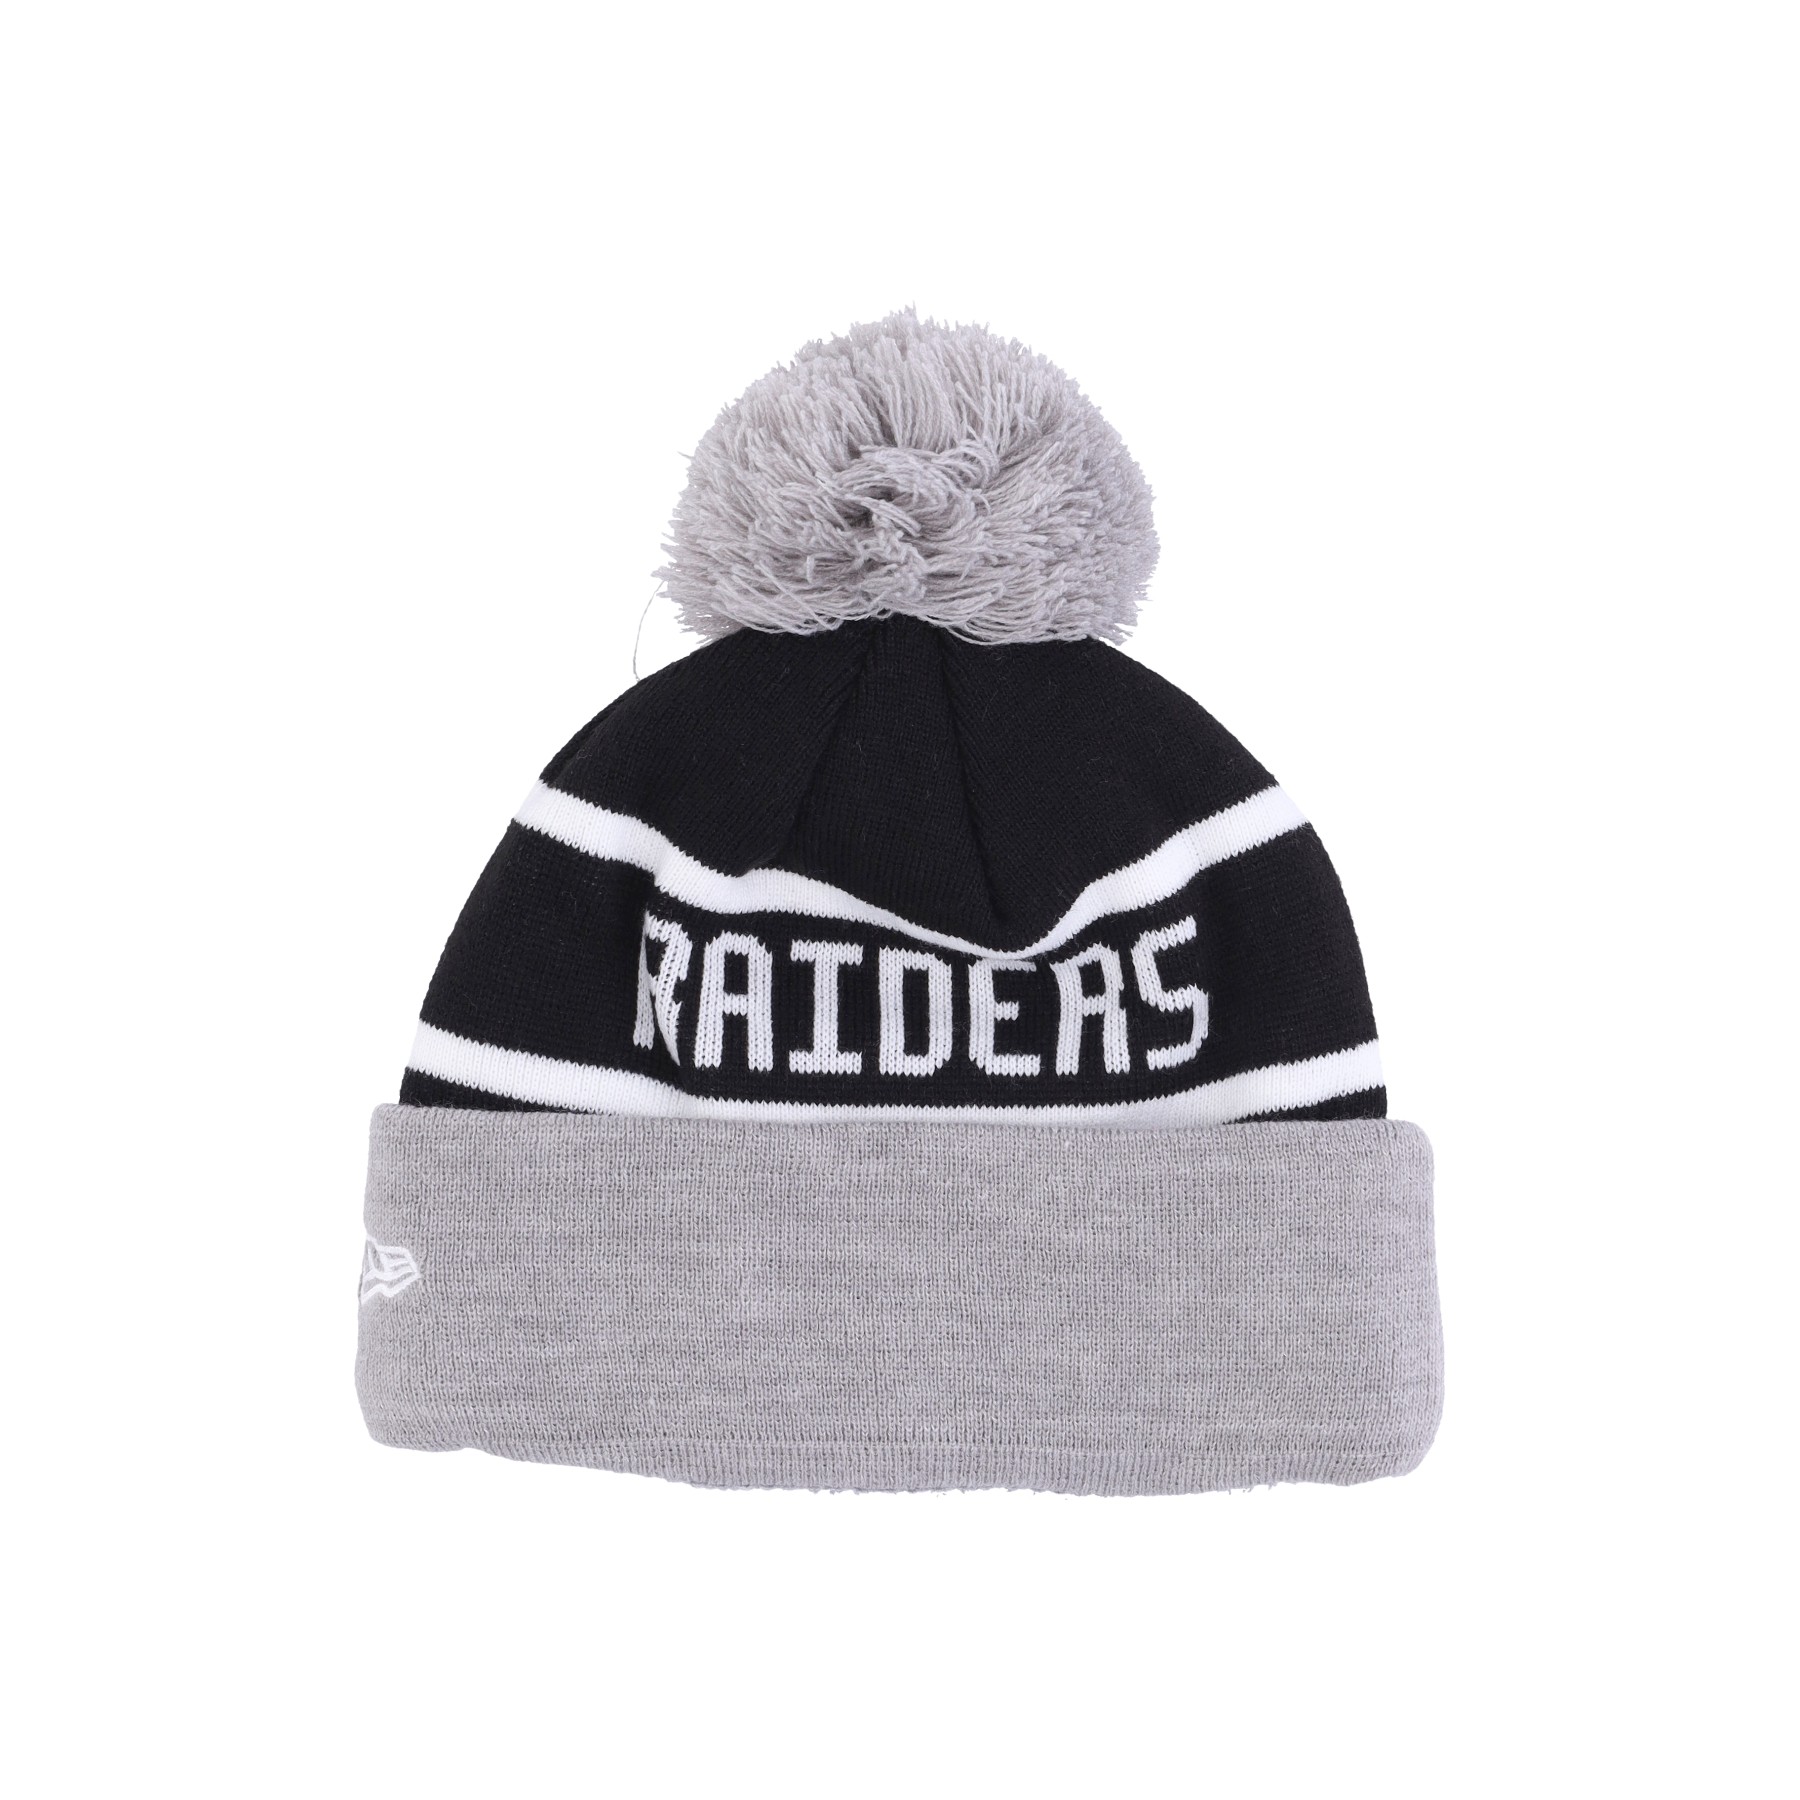 NFL Raiders Jake Cuff Beanie Hat by New Era